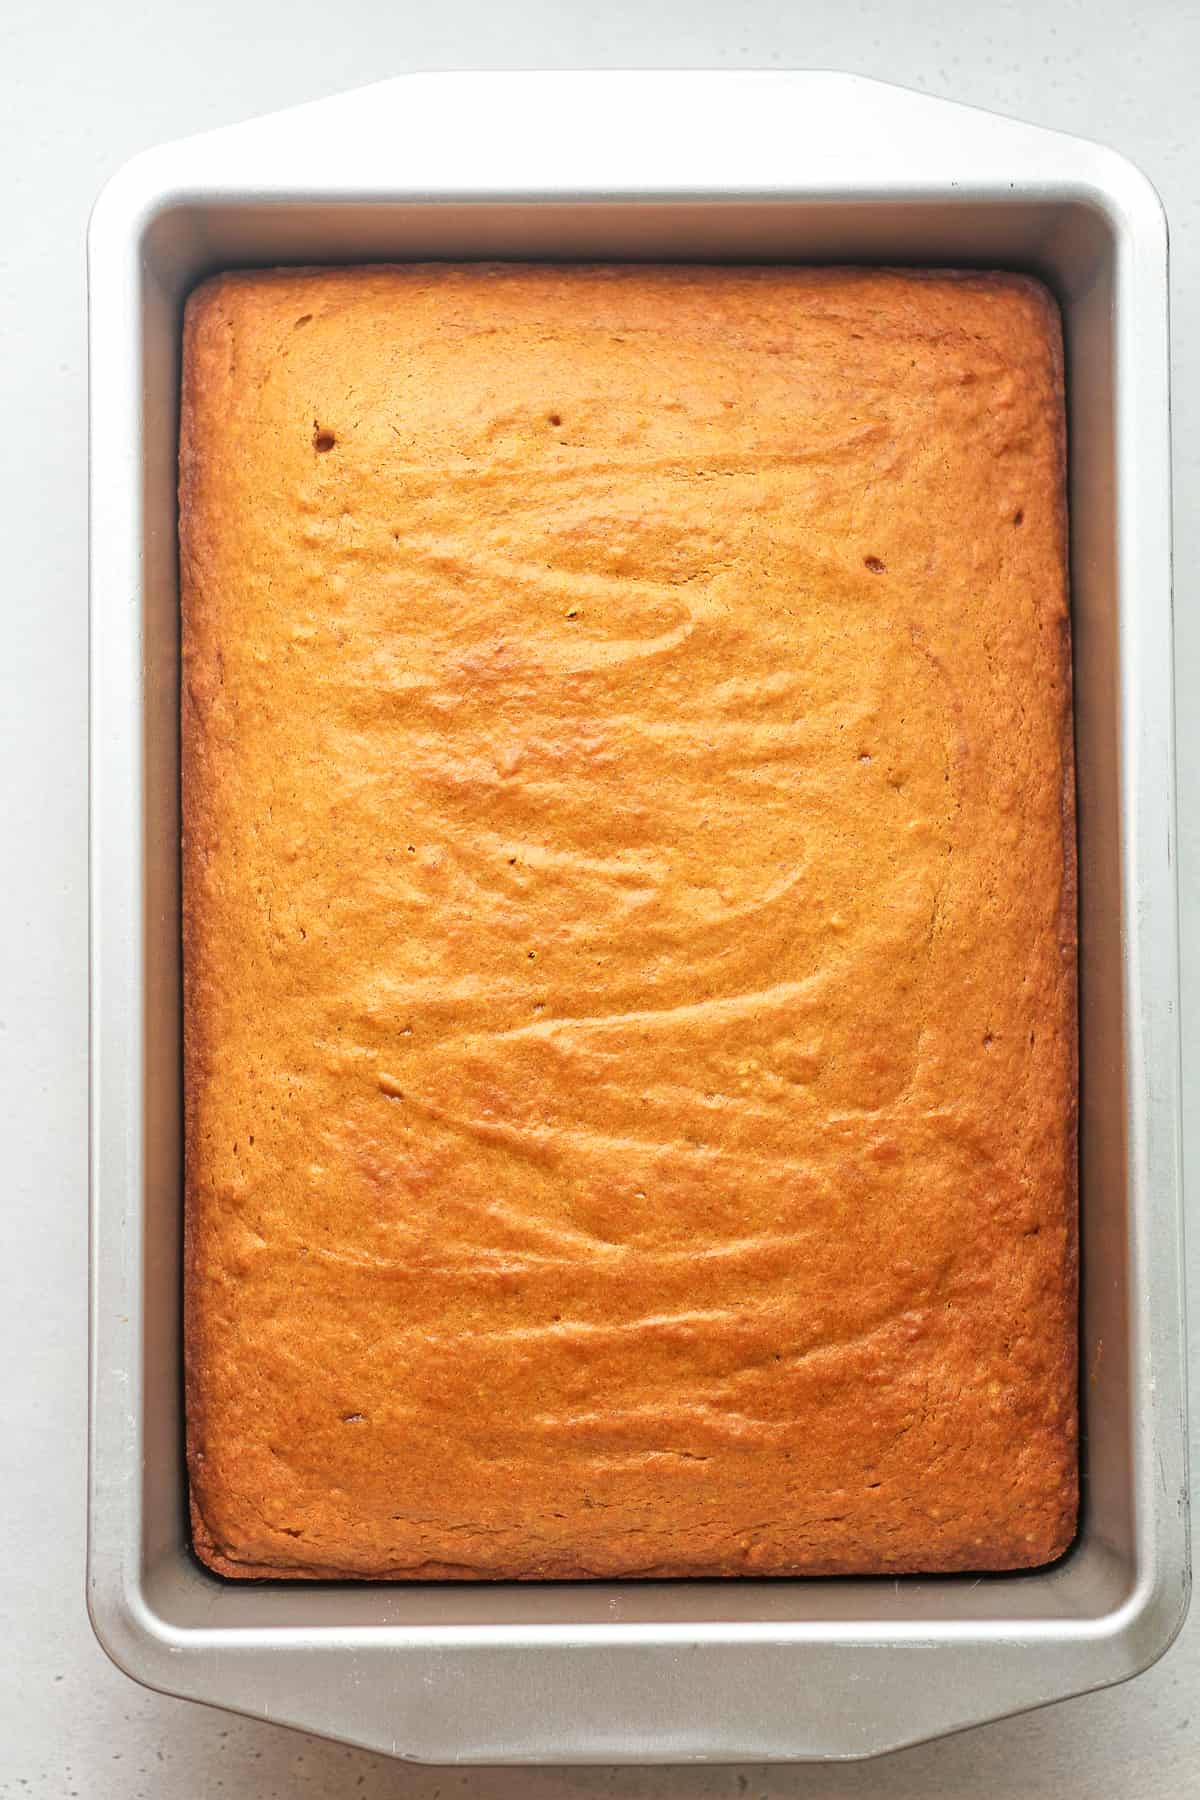 The pumpkin cake in the 9x13 pan.